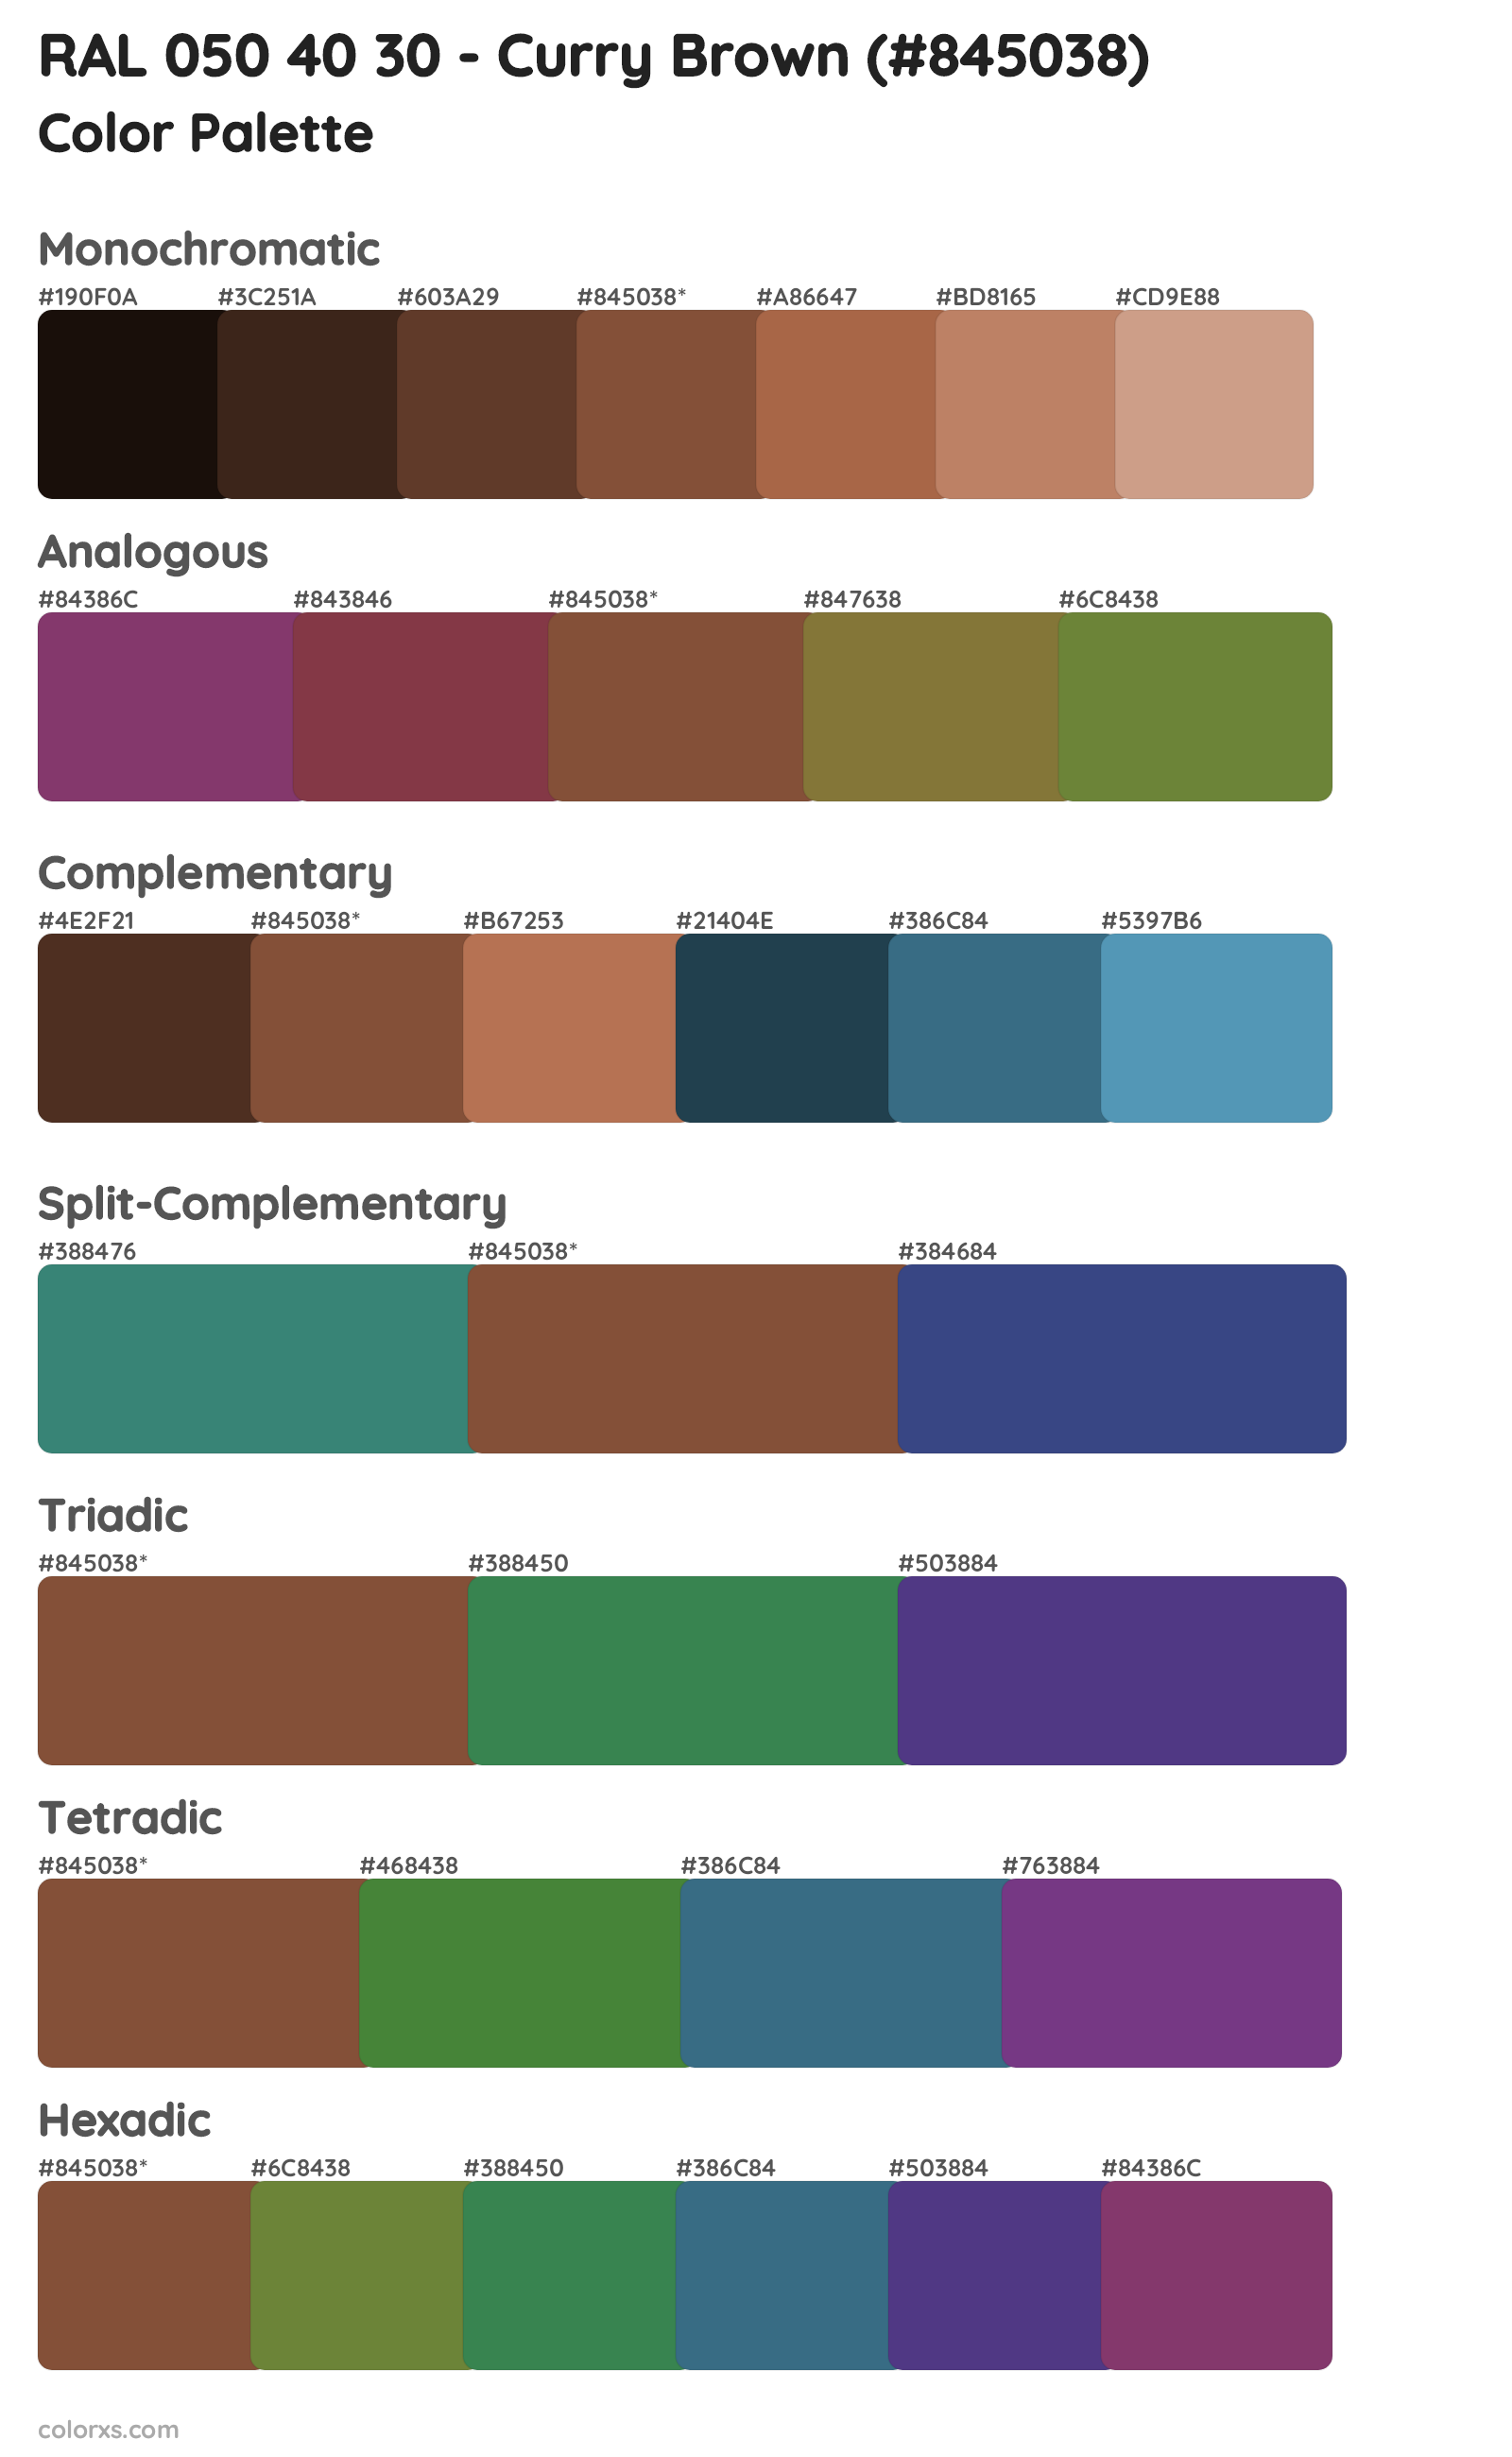 RAL 050 40 30 - Curry Brown Color Scheme Palettes